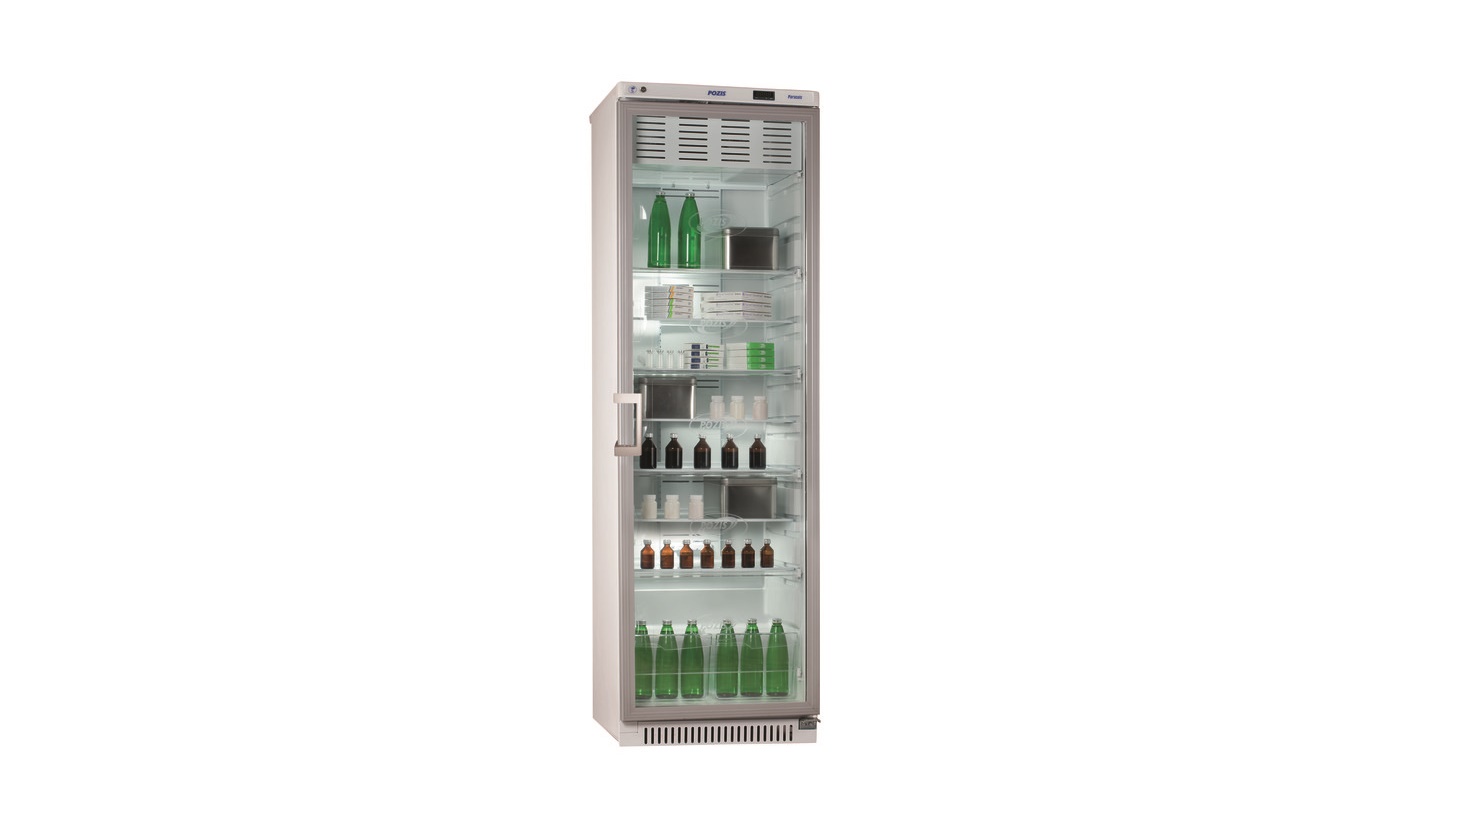 Pharmaceutical refrigerator HF-400-3 